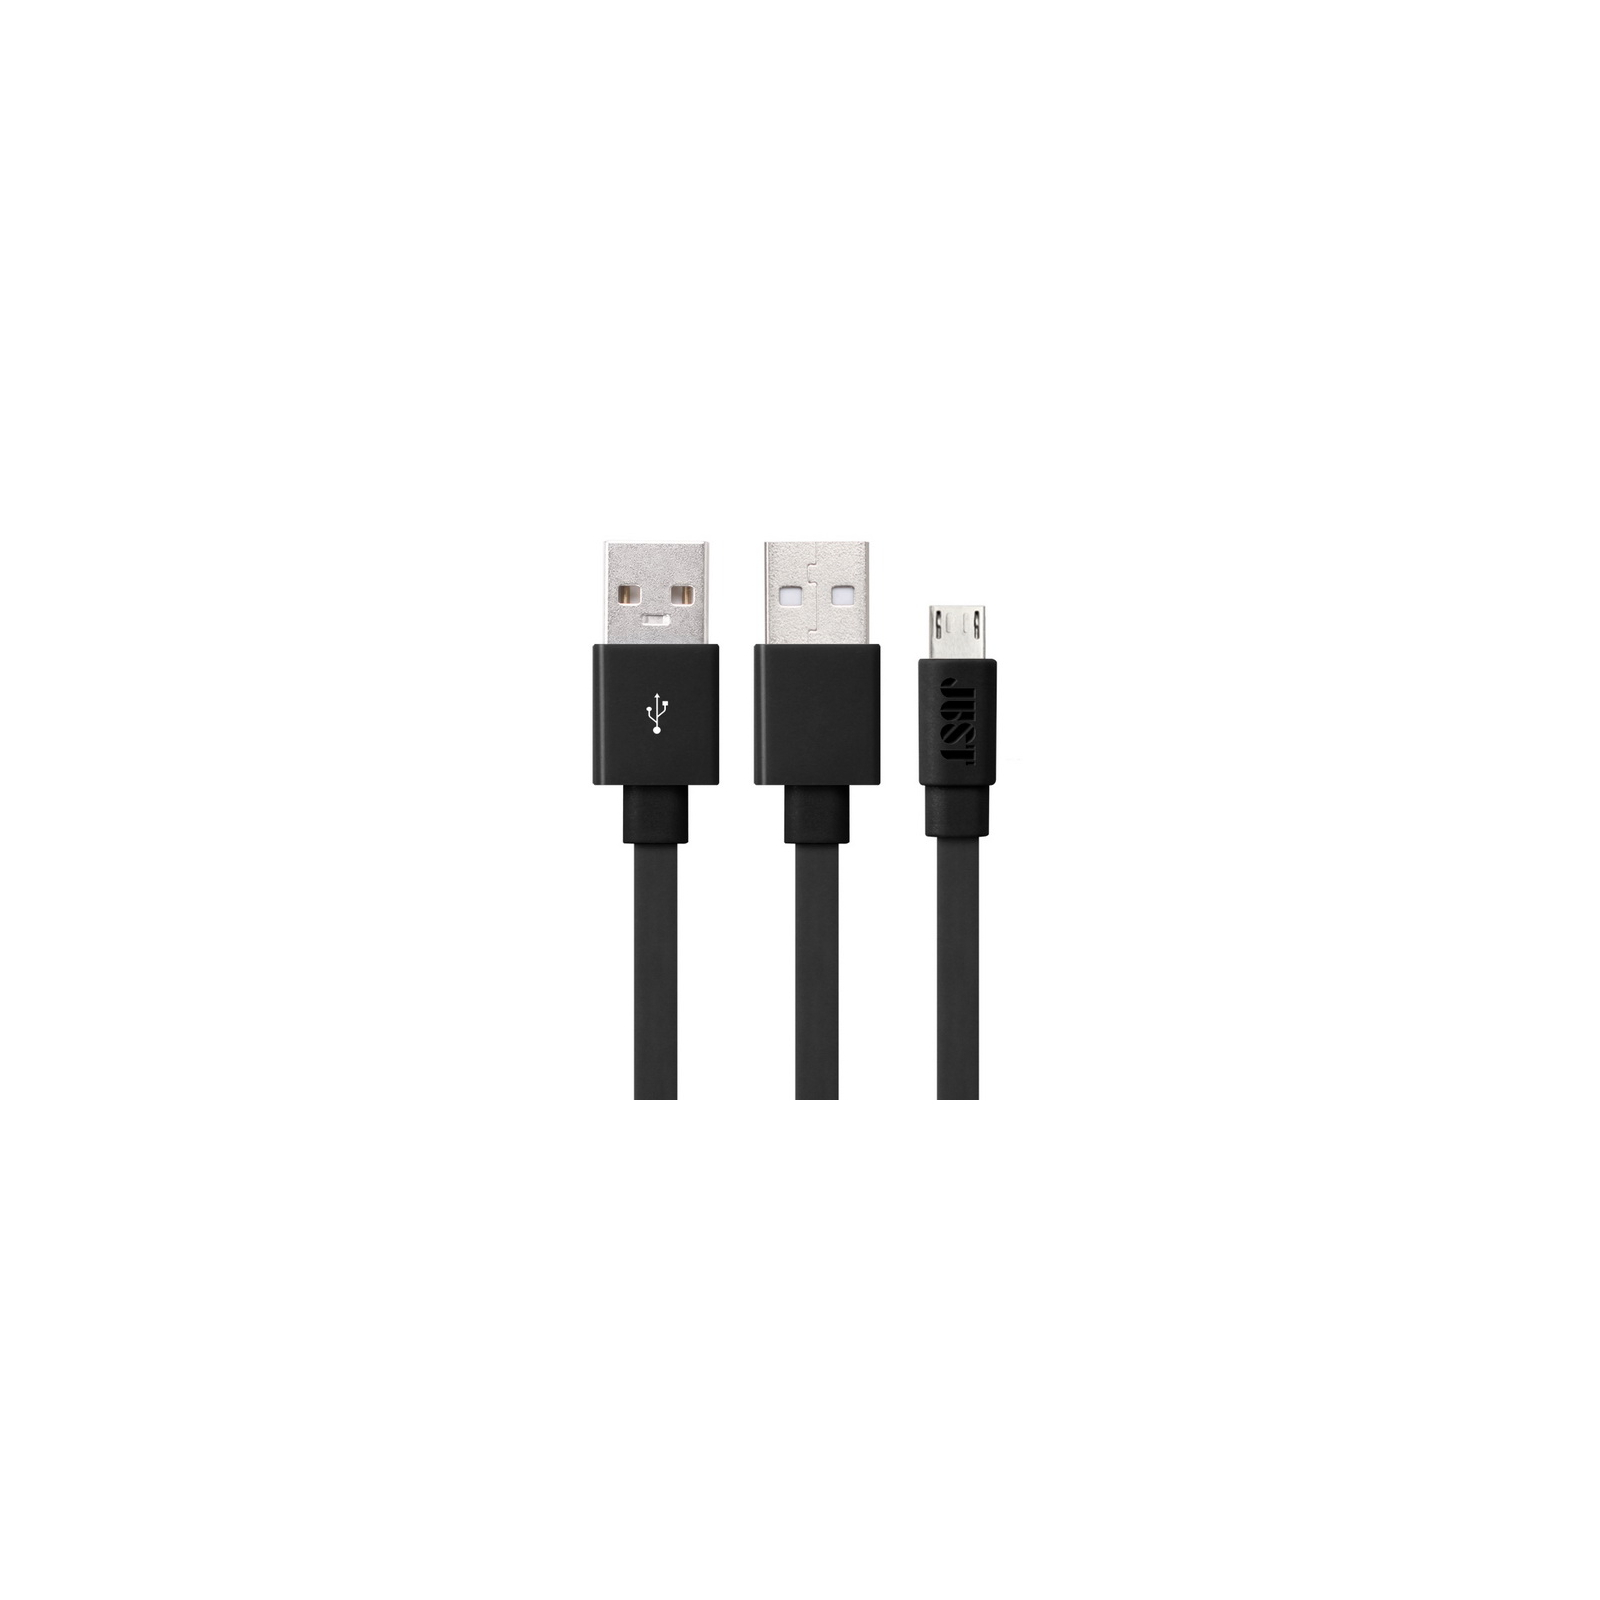 Дата кабель USB 2.0 AM to Micro 5P 1.2m Freedom Black Just (MCR-FRDM-BLCK)